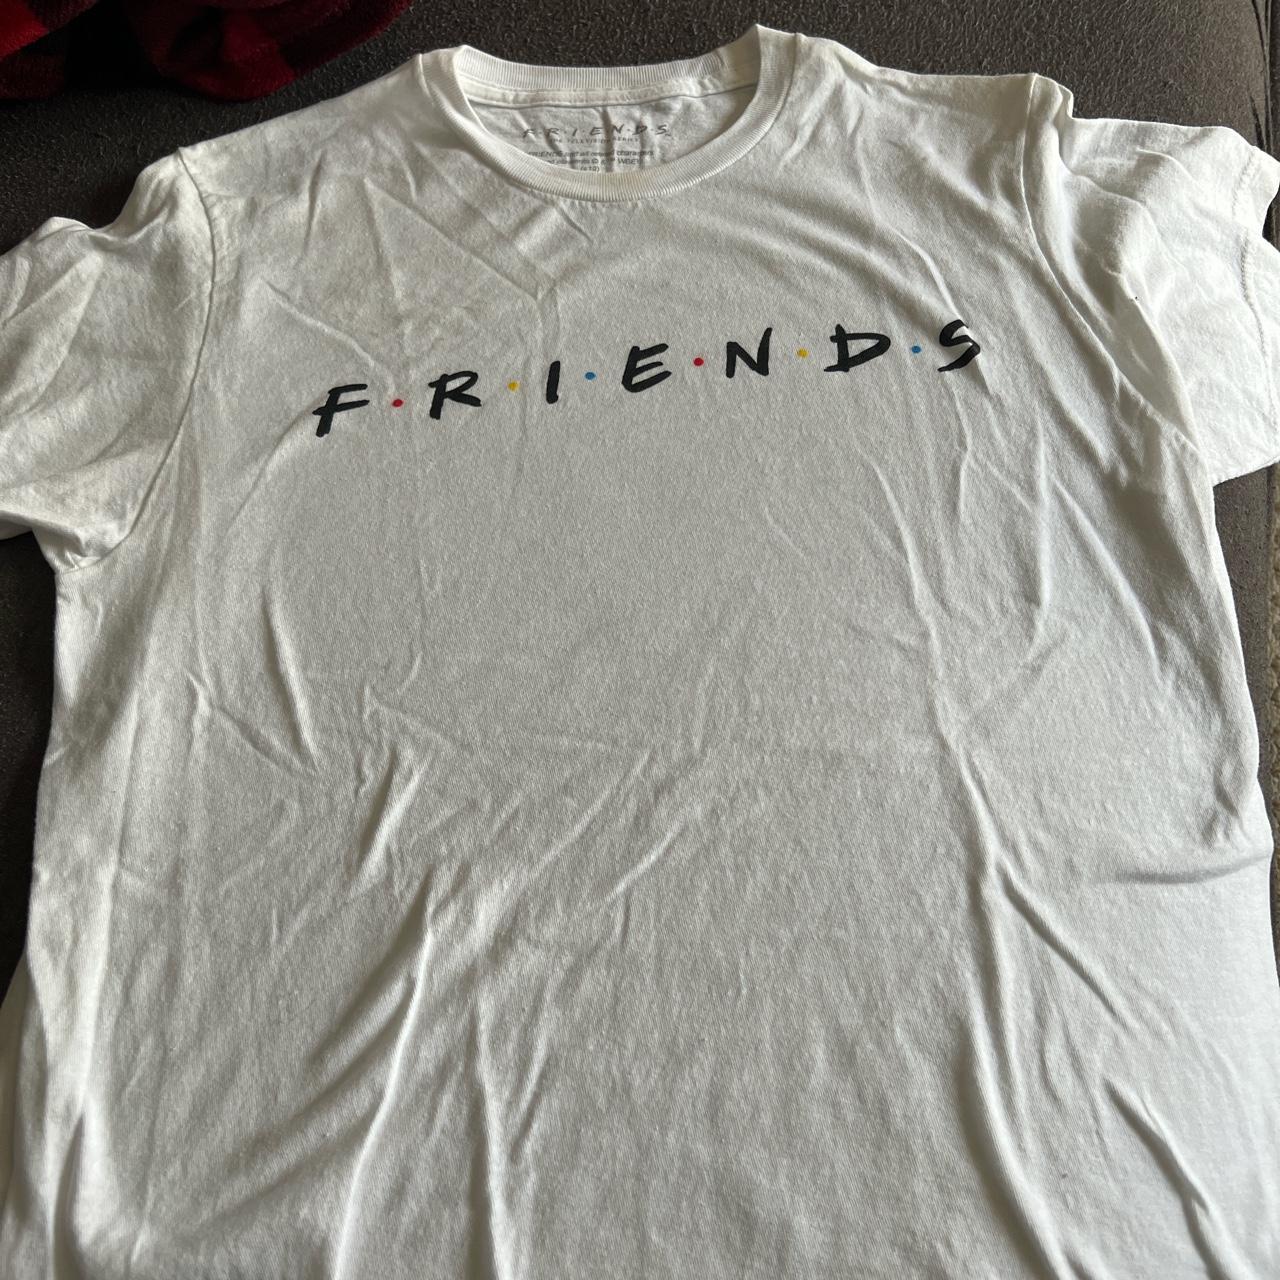 Product Image 1 - Friends white t-shirt
#friends #tshirt